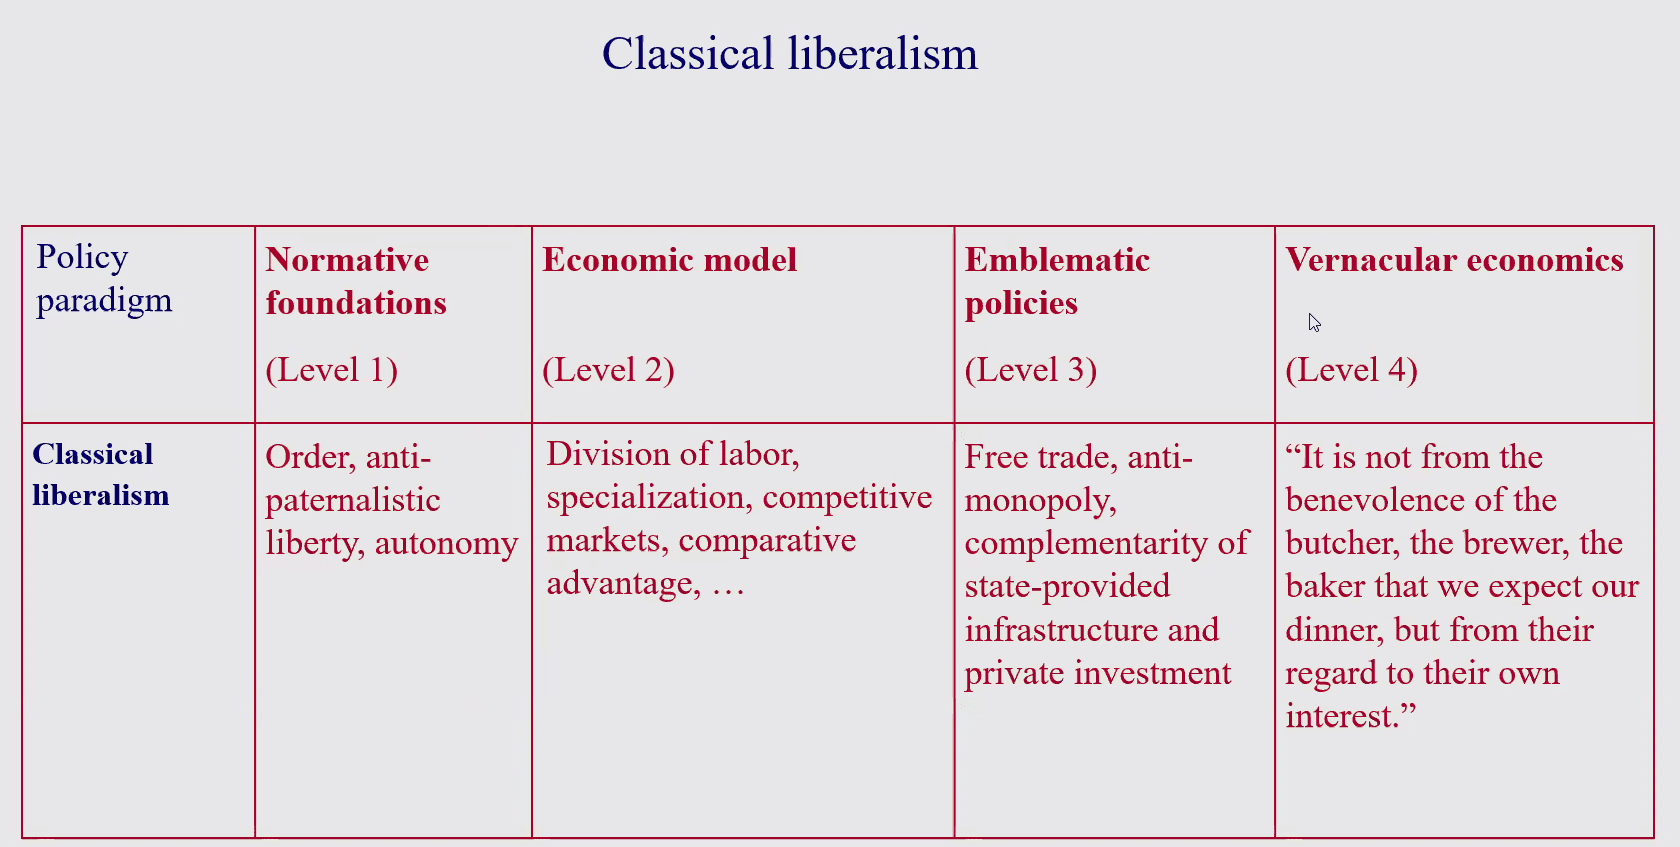 01 Classical liberalism